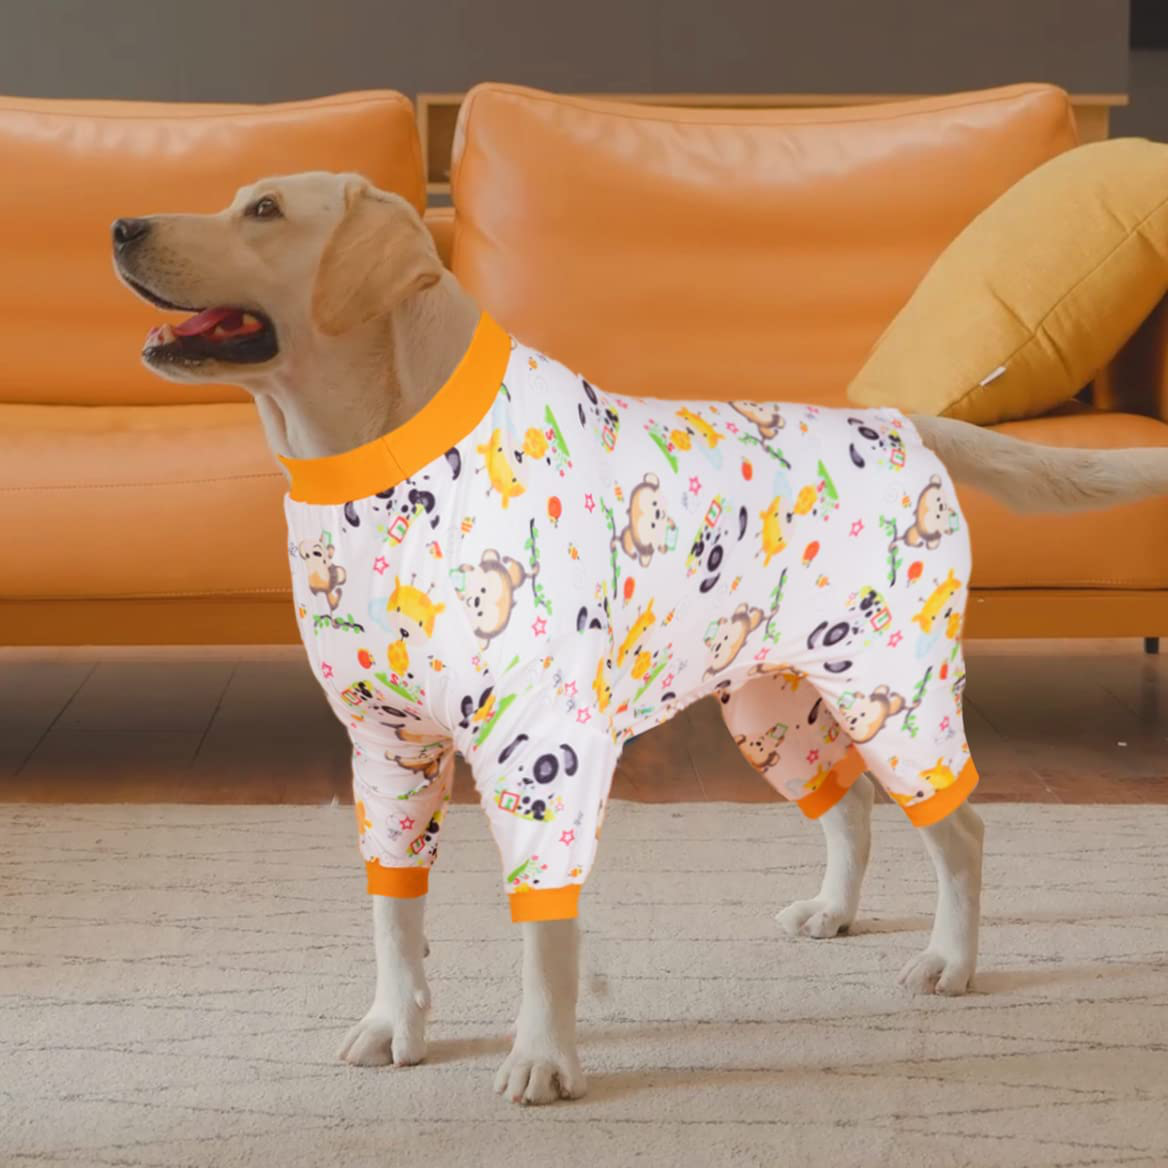 Lovinpet Big Dog Pajamas, Dog Clothes with Polar Bear Snowflake Printed, Dog Onesie with Zipper Design for Medium & Large Dogs, Breathable Pitbull Pajamas for Post Surgery Shirt, UV Protection